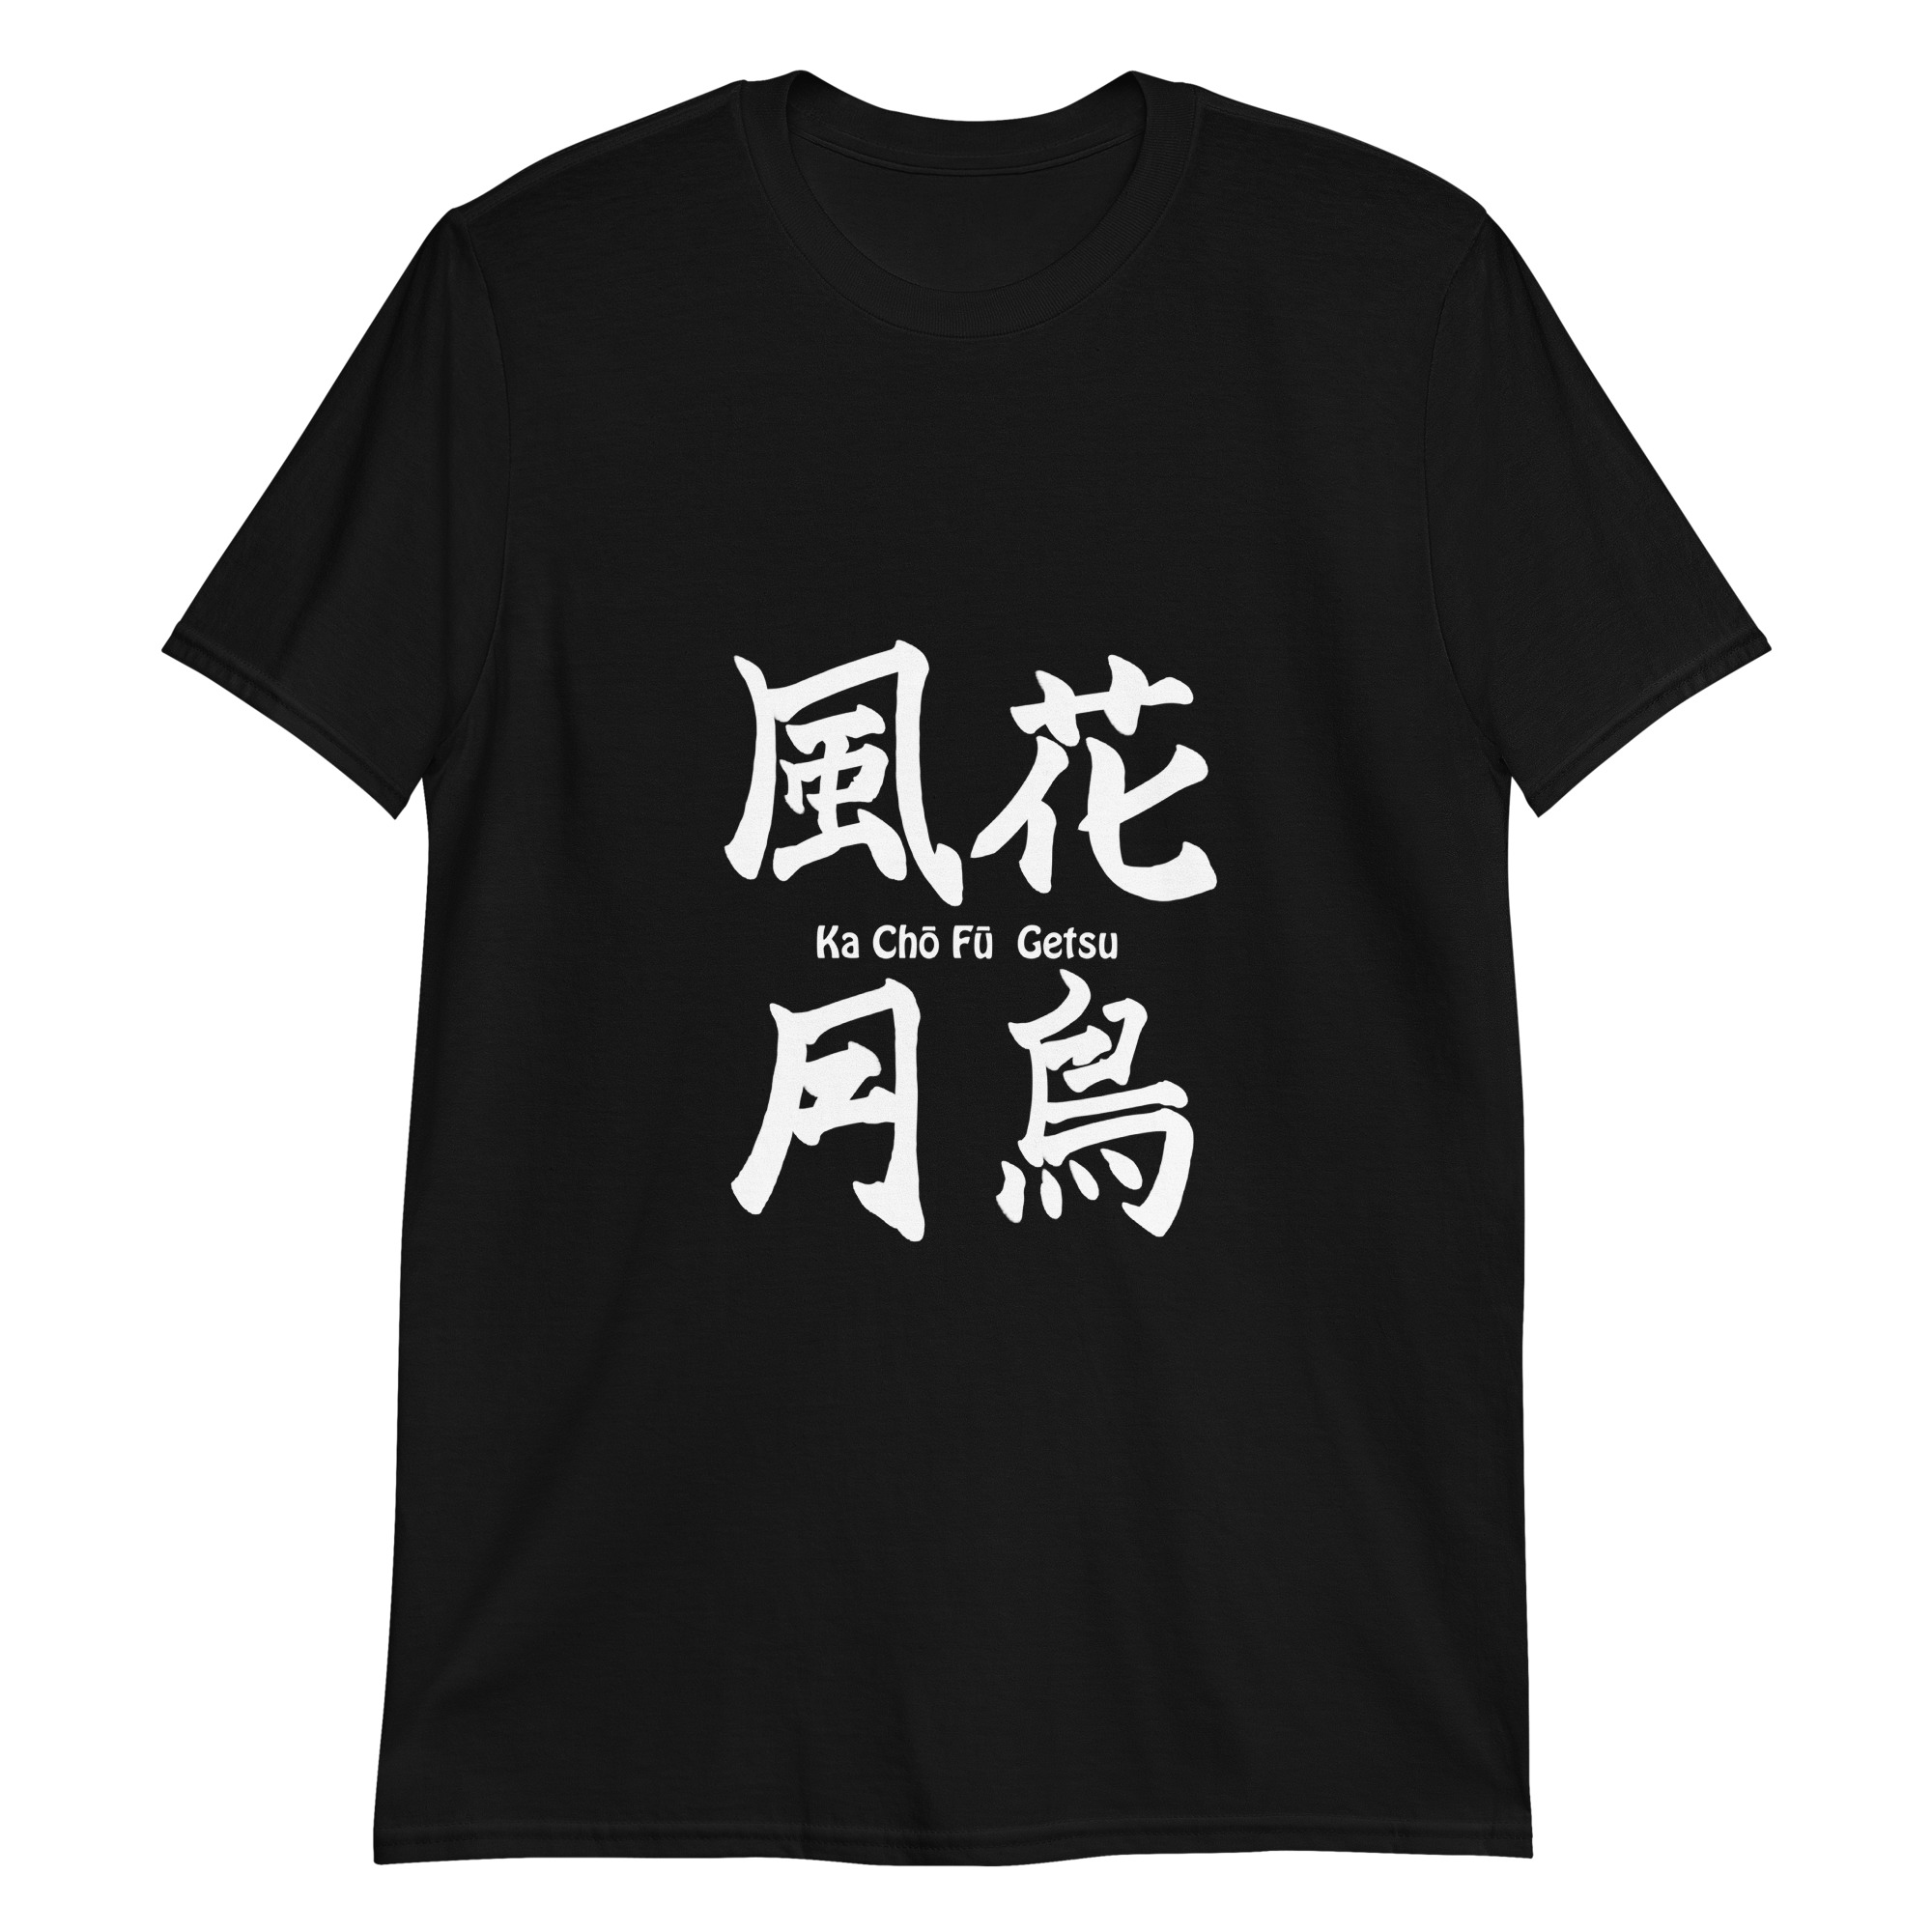 unisex-basic-softstyle-t-shirt-black-front-6404a6a5e87a4.jpg